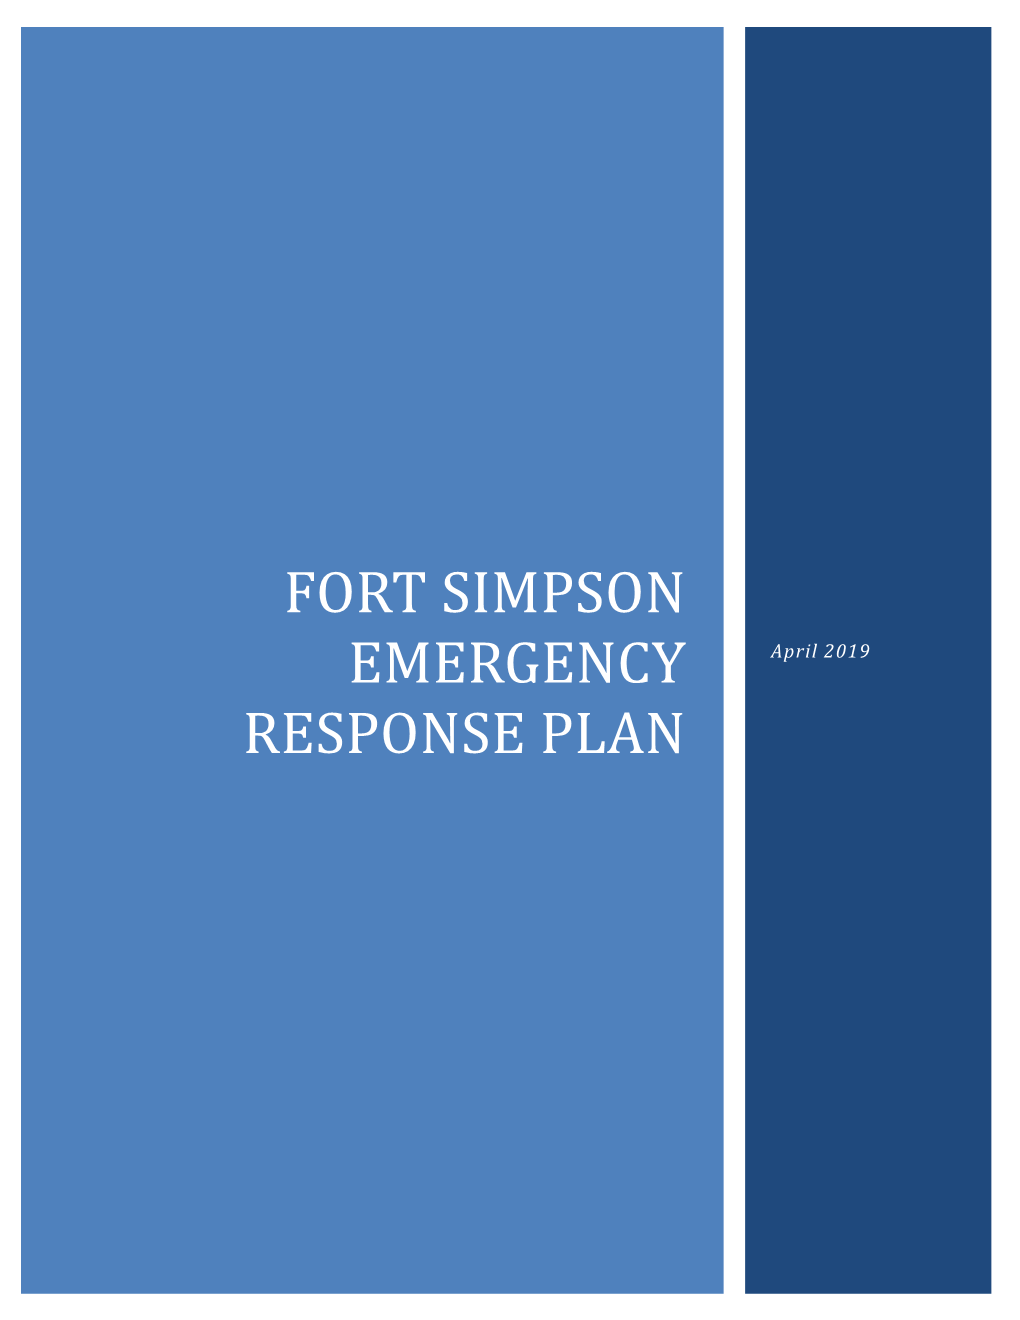 Fort Simpson Emergency Response Plan